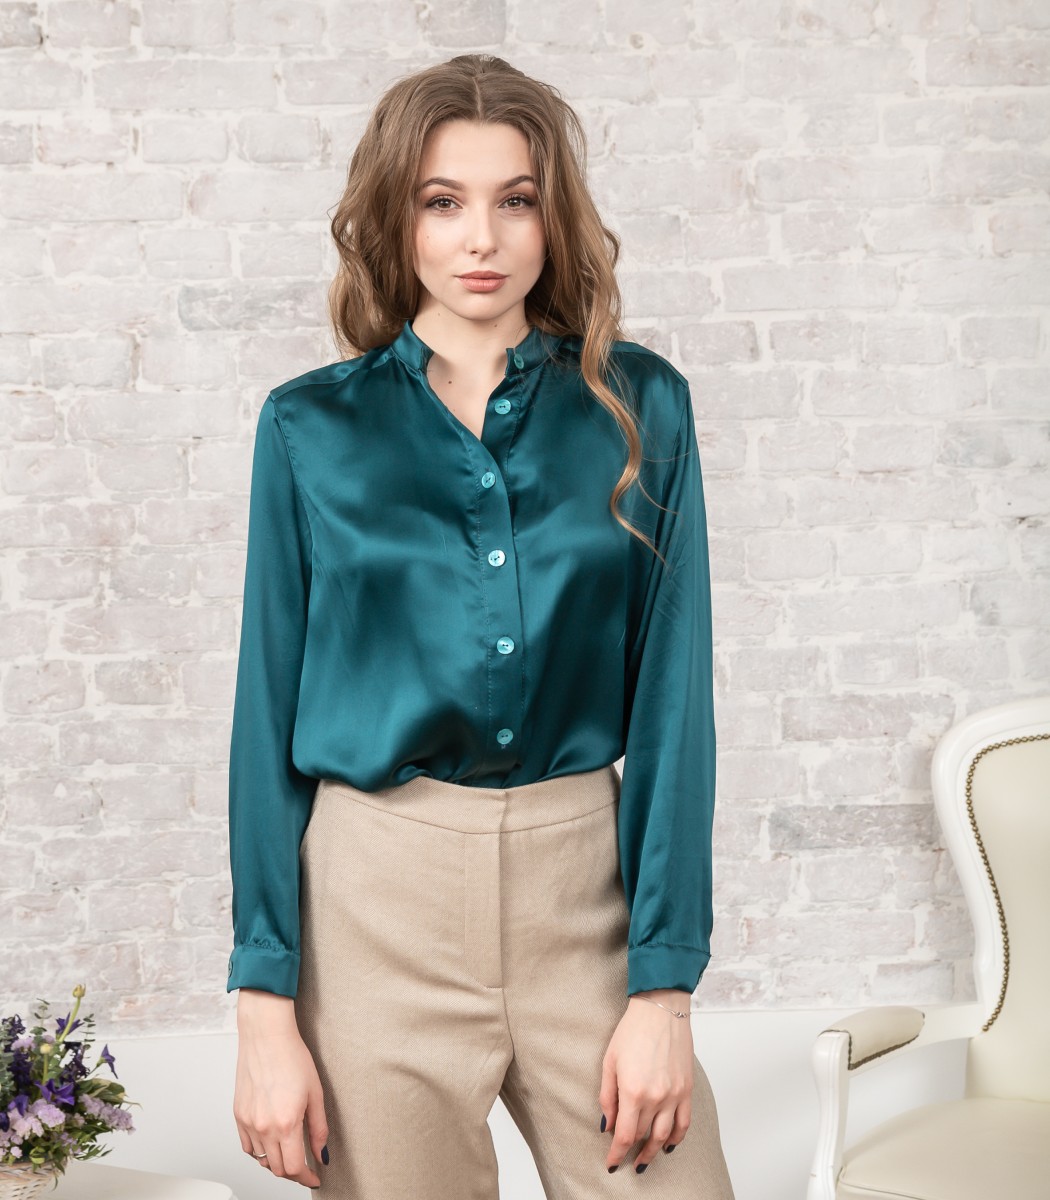 Купить блузку из шелка. Шелковая блузка Gizia. Zolla блузка зеленая. OSTIN. Блузка 100% шелк. Шелковая блуза.